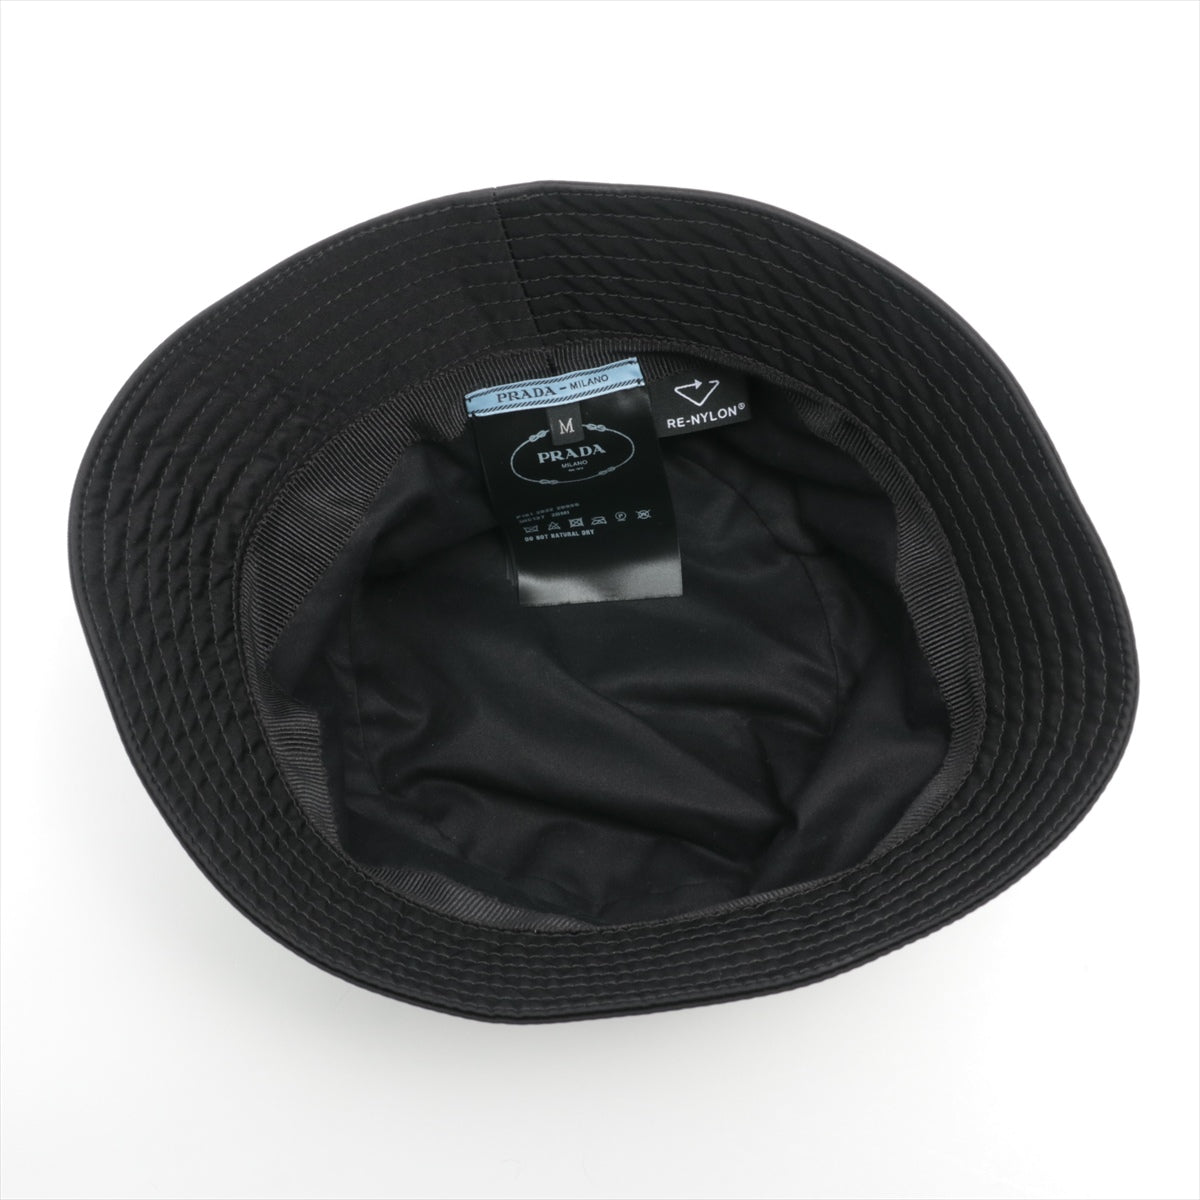 Prada Tessuto Hat M Nylon Black